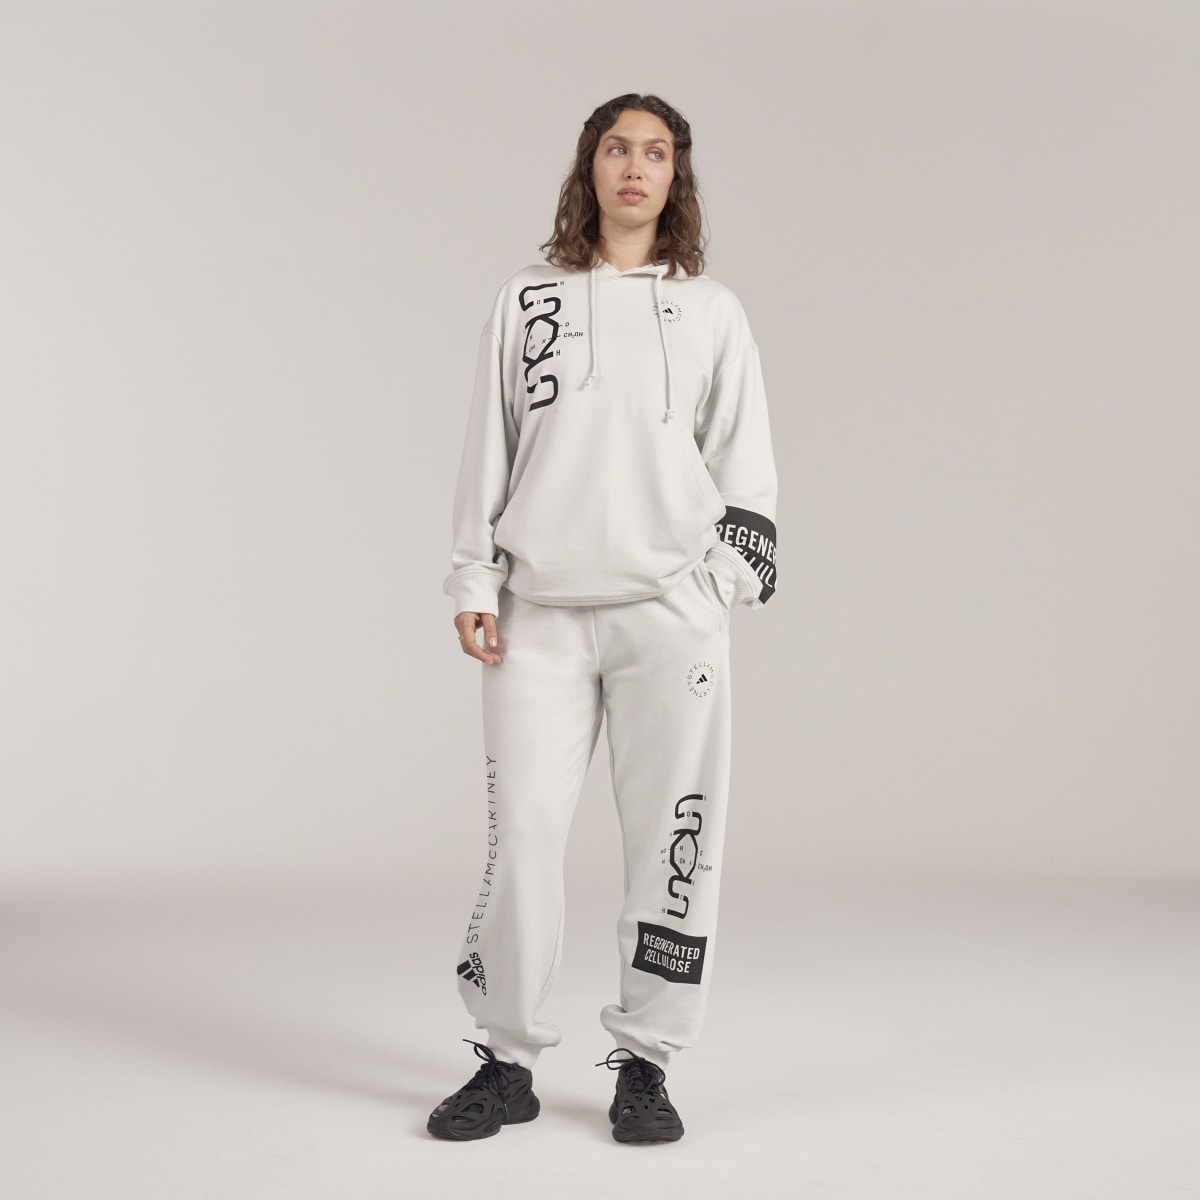 Adidas by Stella McCartney Sportswear Regenerated Cellulose Hose – Genderneutral. 8